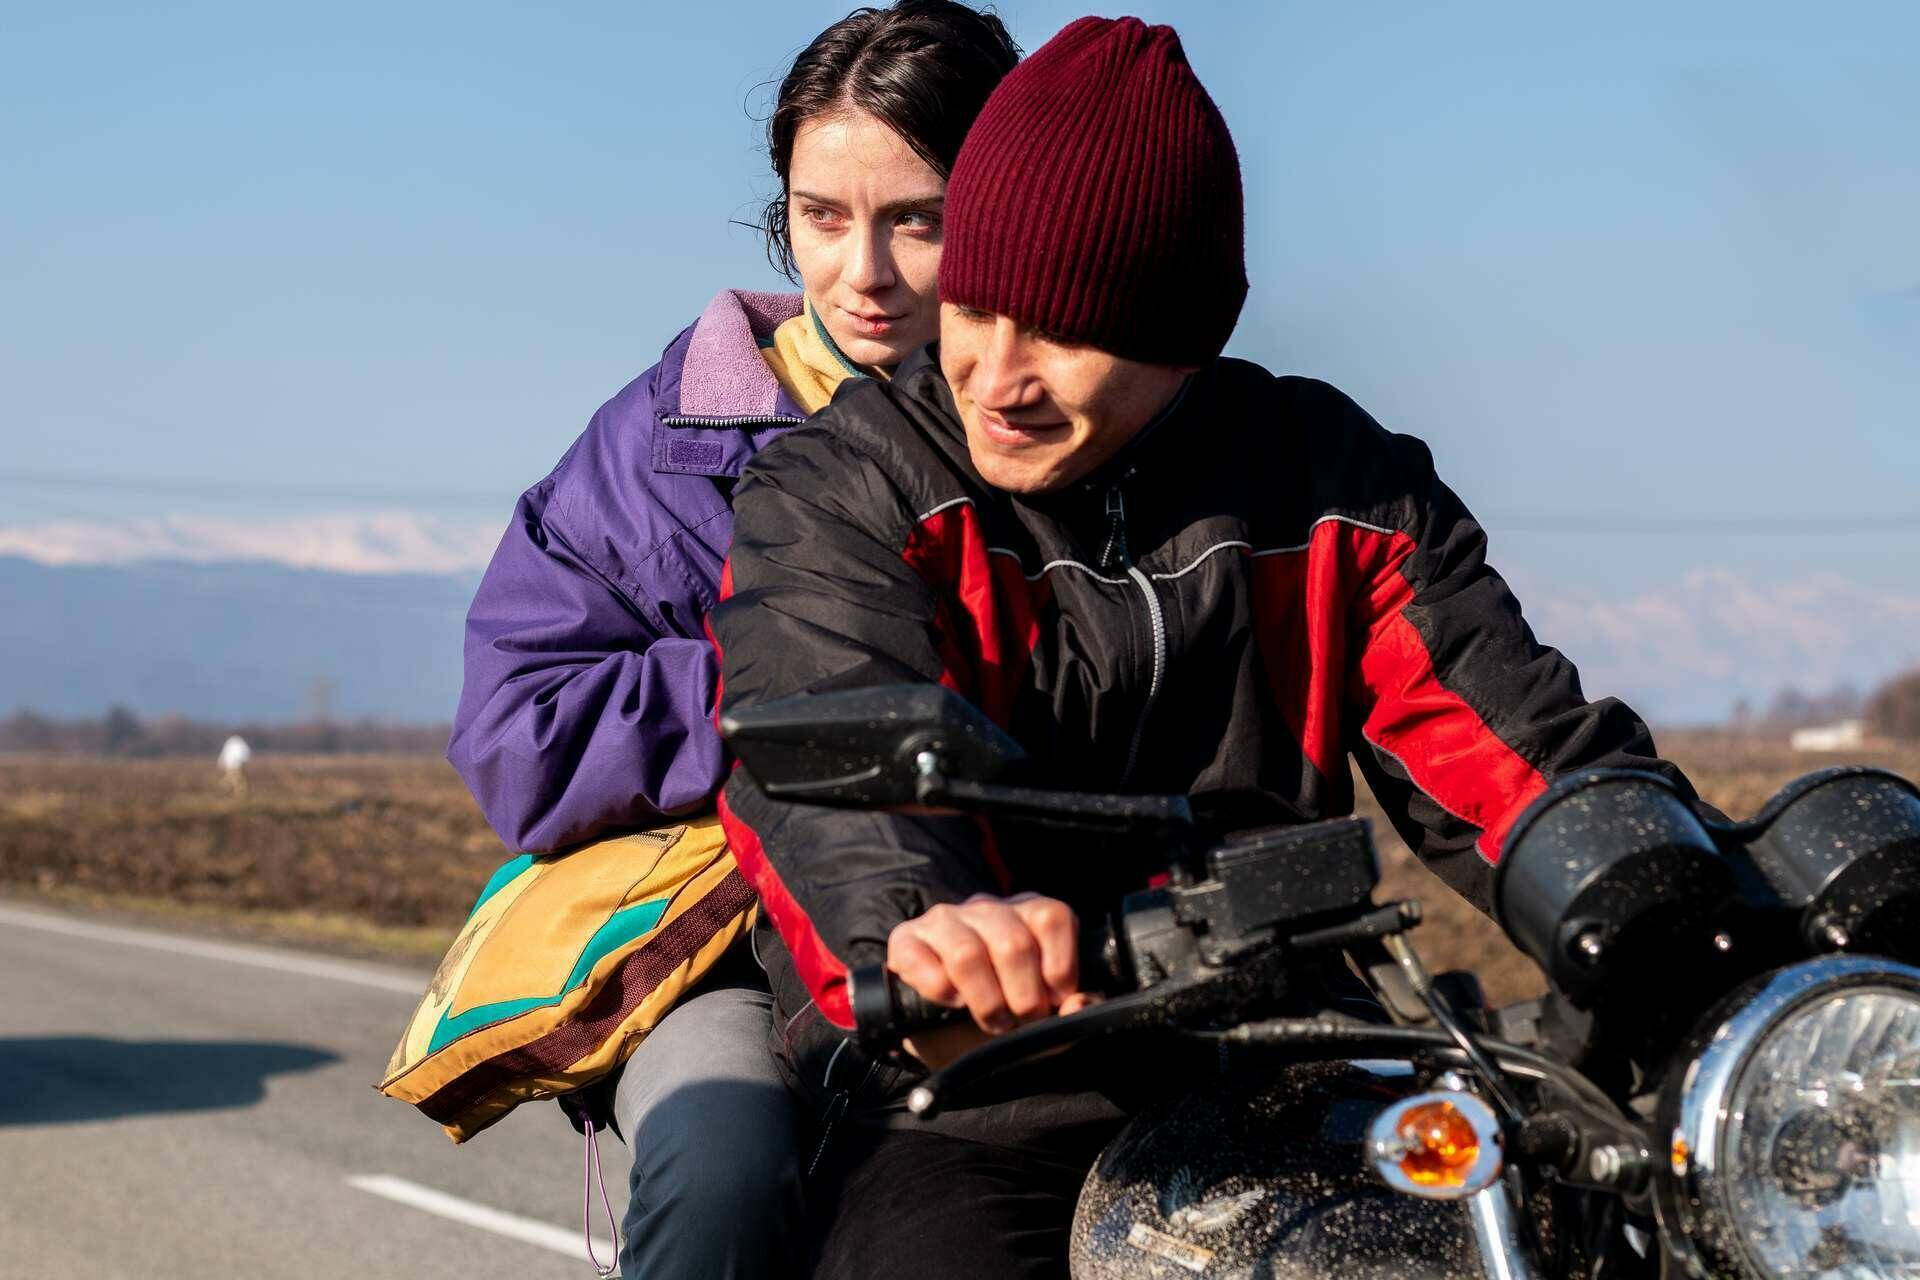 Ada and Akim take on a motorbike